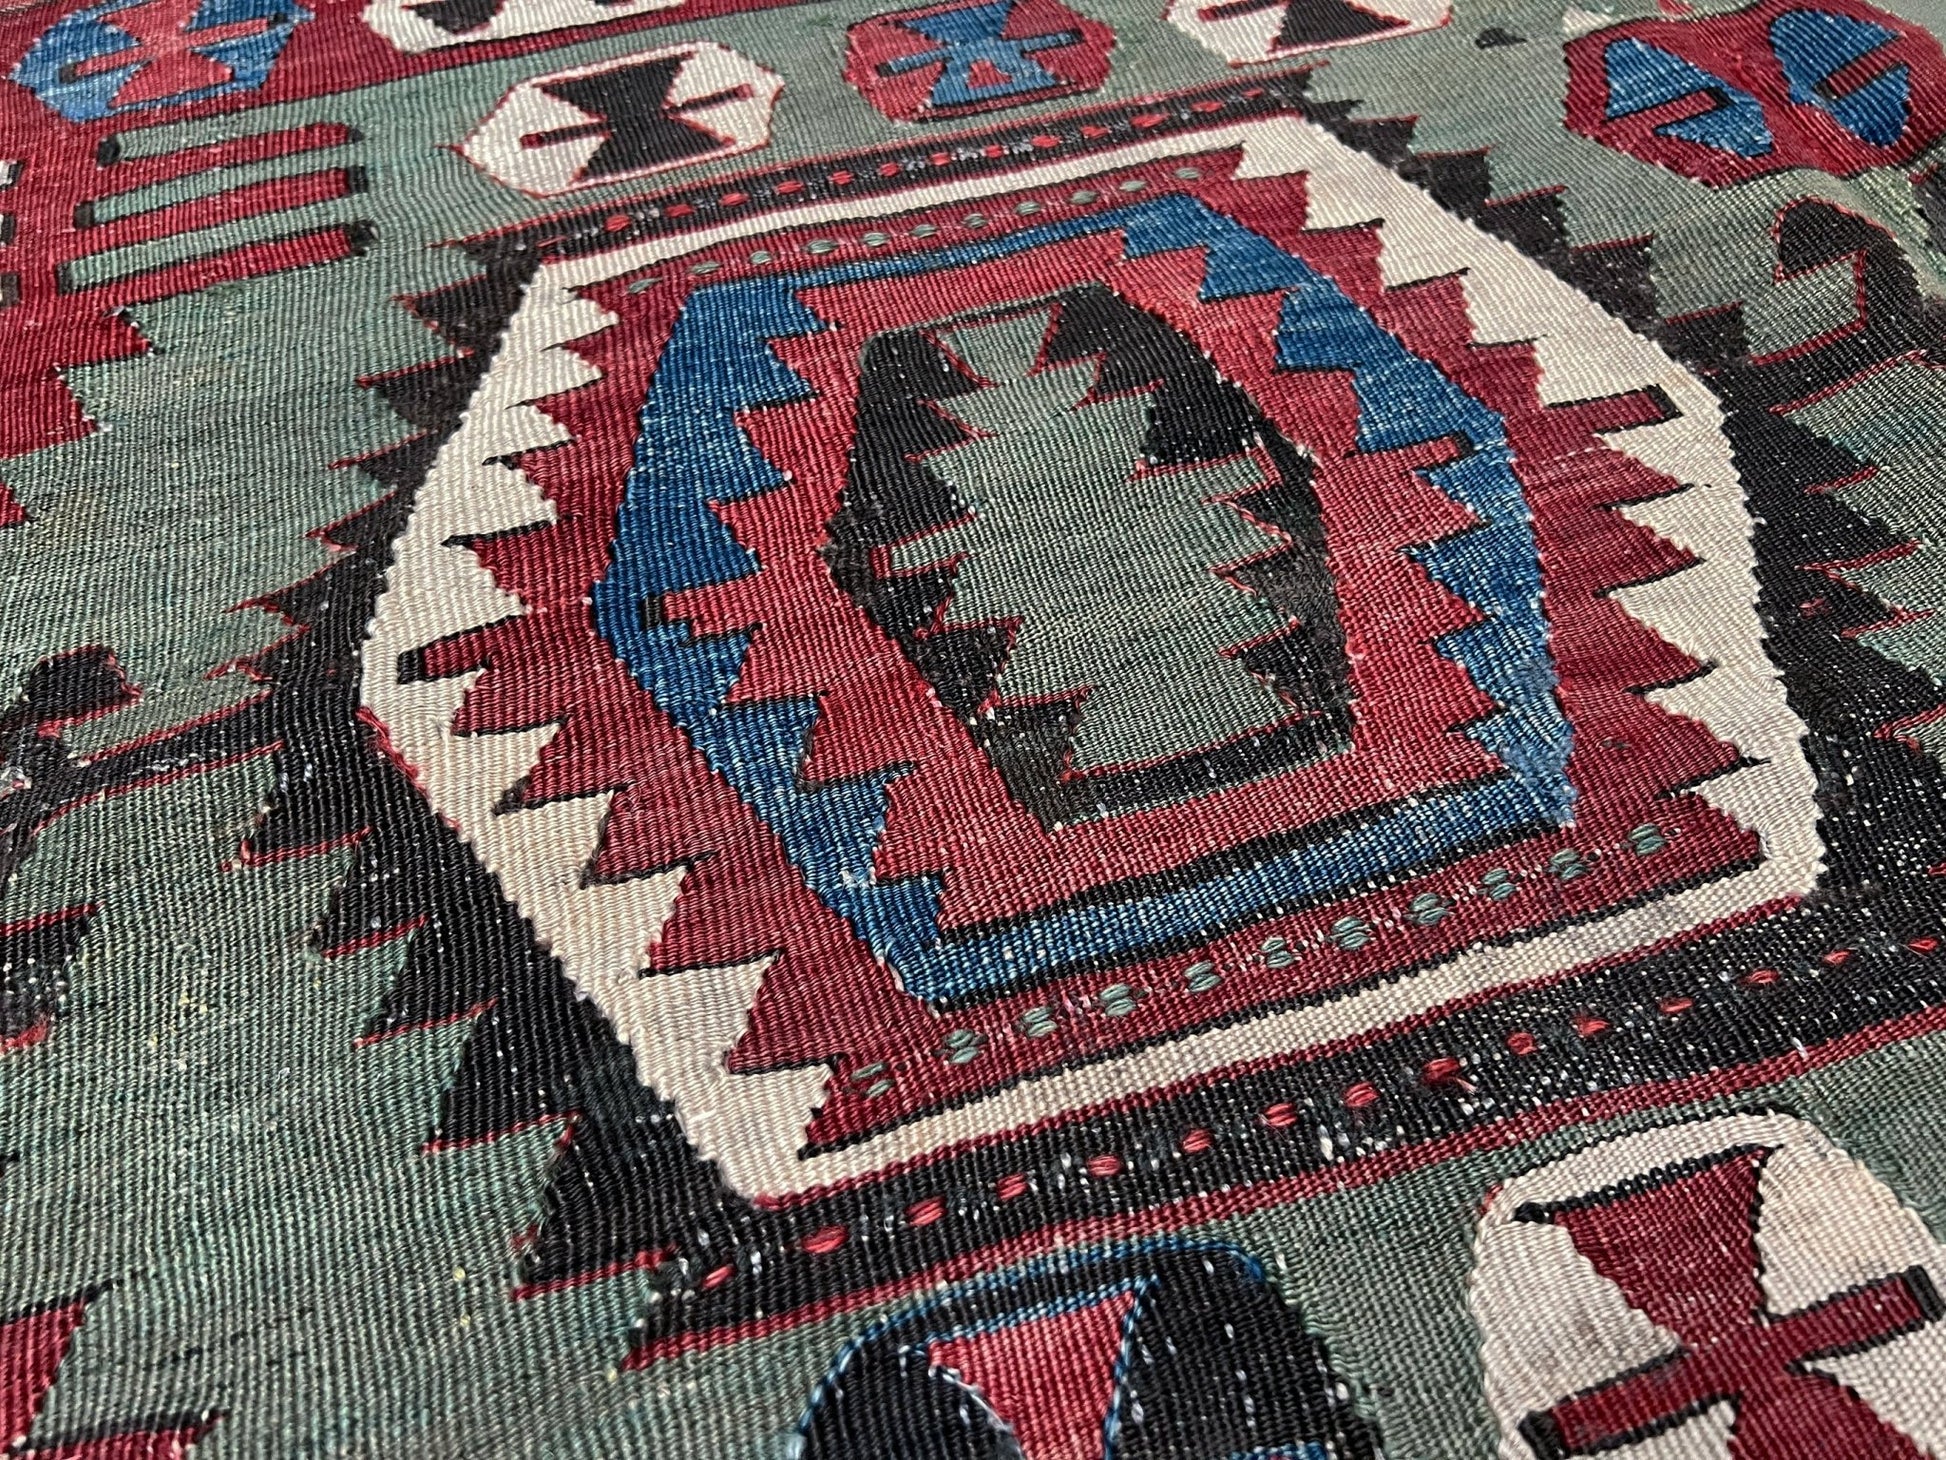 Konya antique turkish kilim rug shop san francisco bay area. Handmade wool rug shop palo alto.  Buy tribal kilim online, vibrant color.